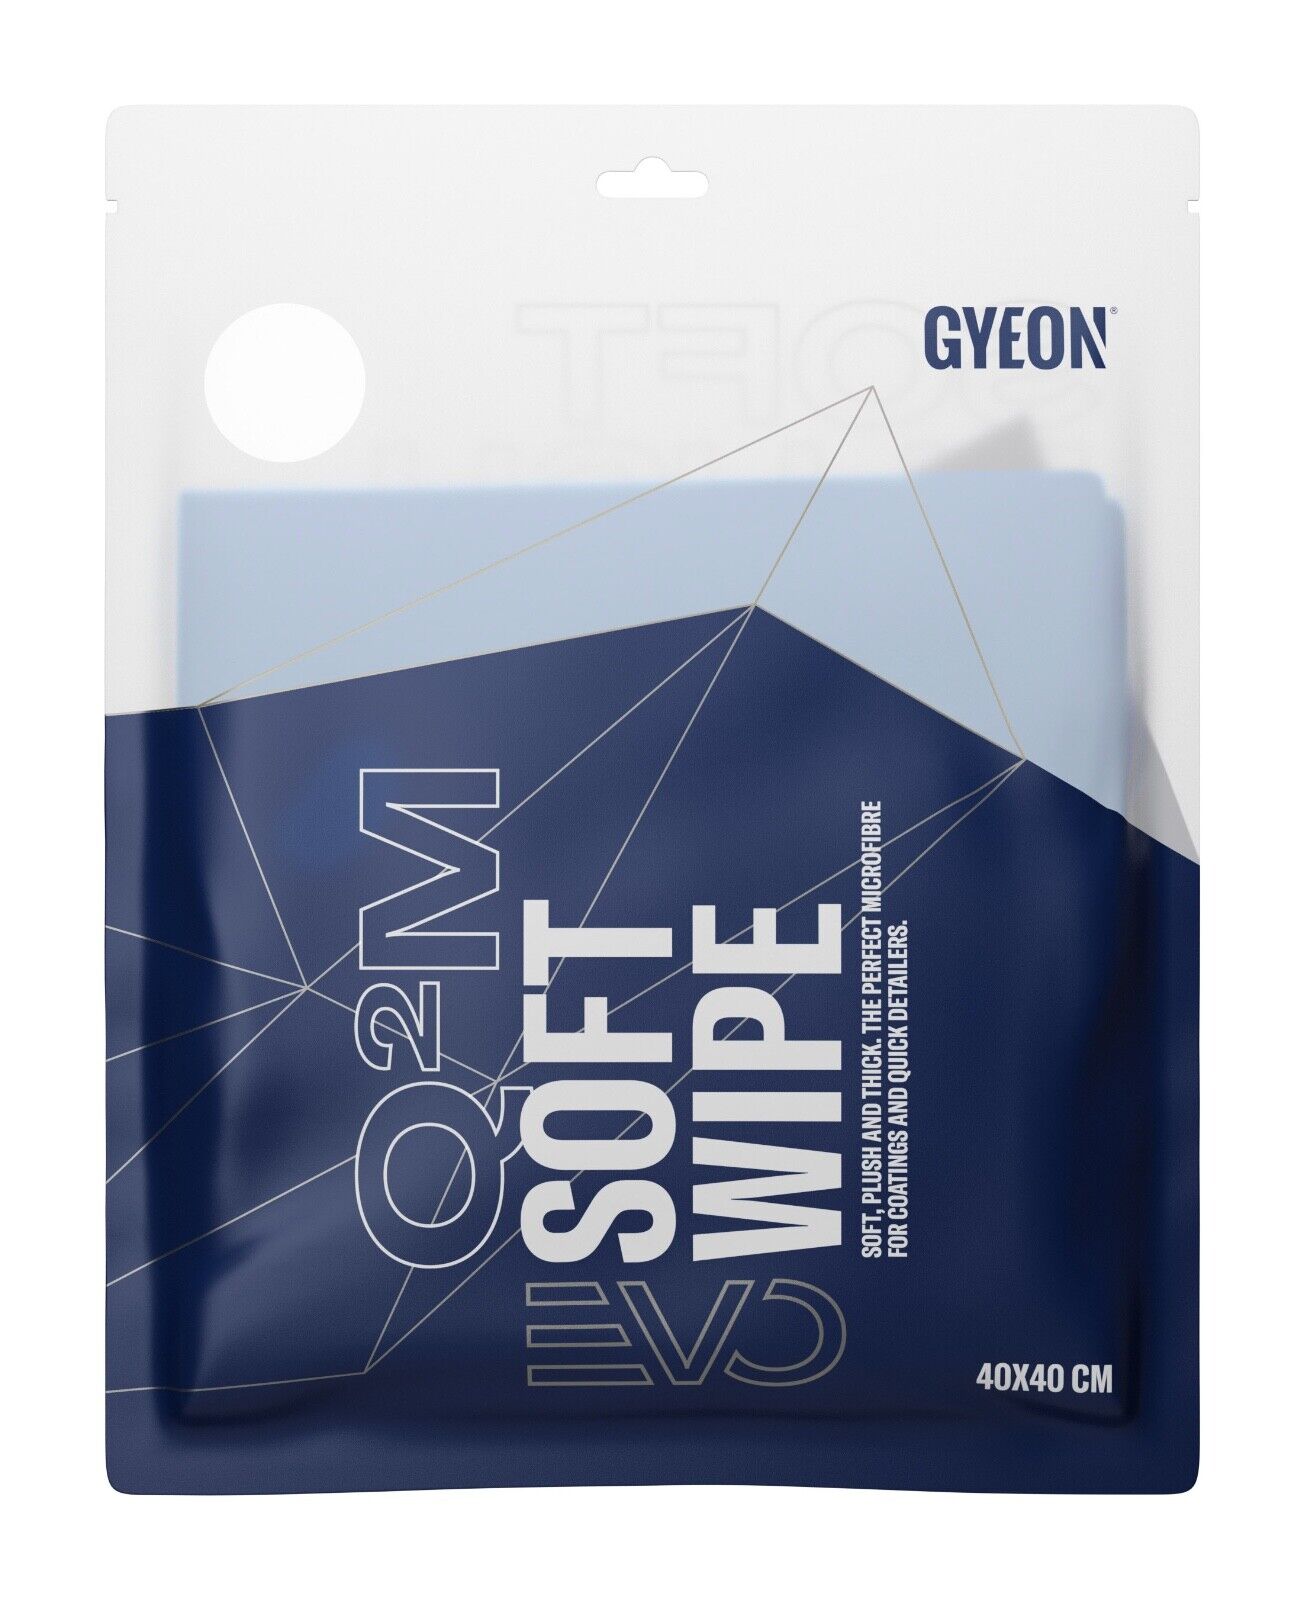 Gyeon Q2M Soft Wipe EVO 40cm x 40cm